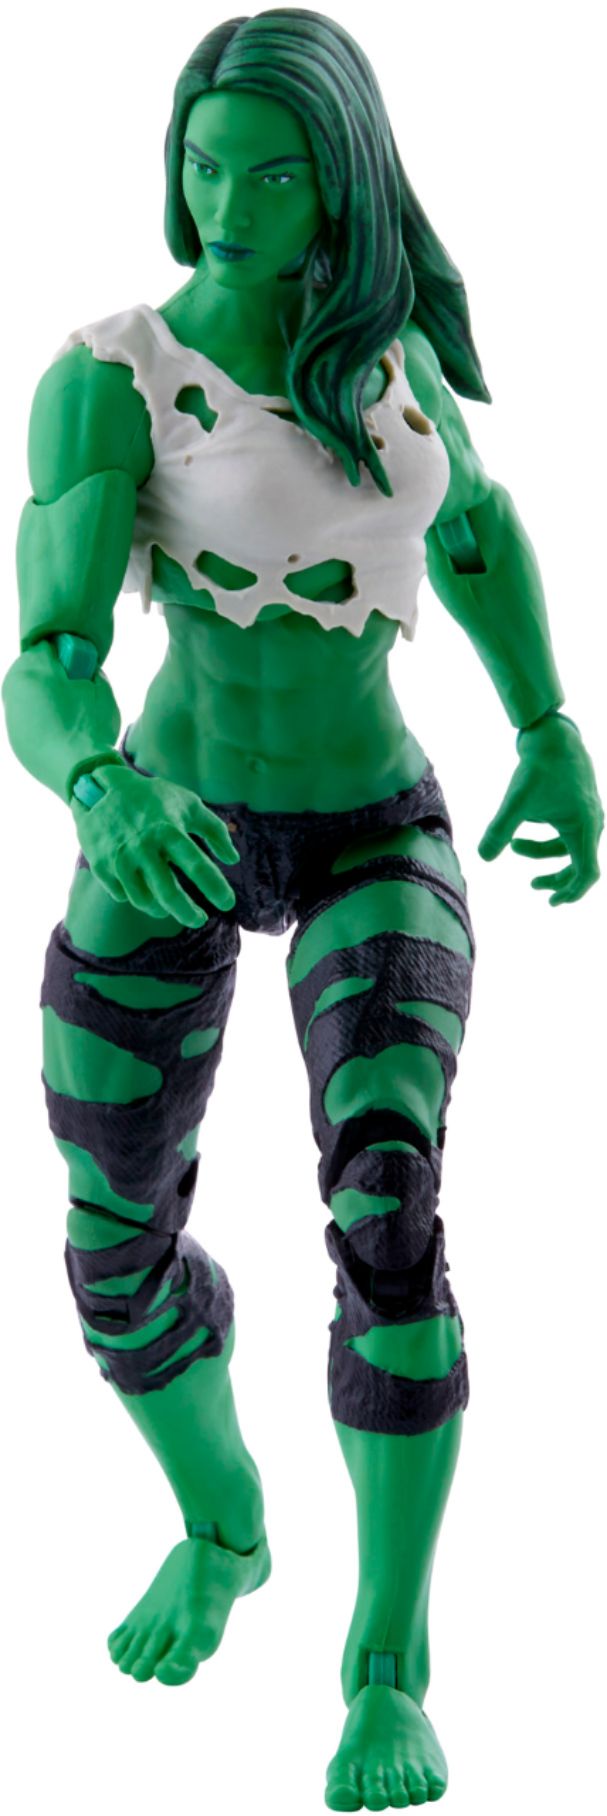 Marvel Legends Series She-Hulk Actionfigur 2021 Exclusive 